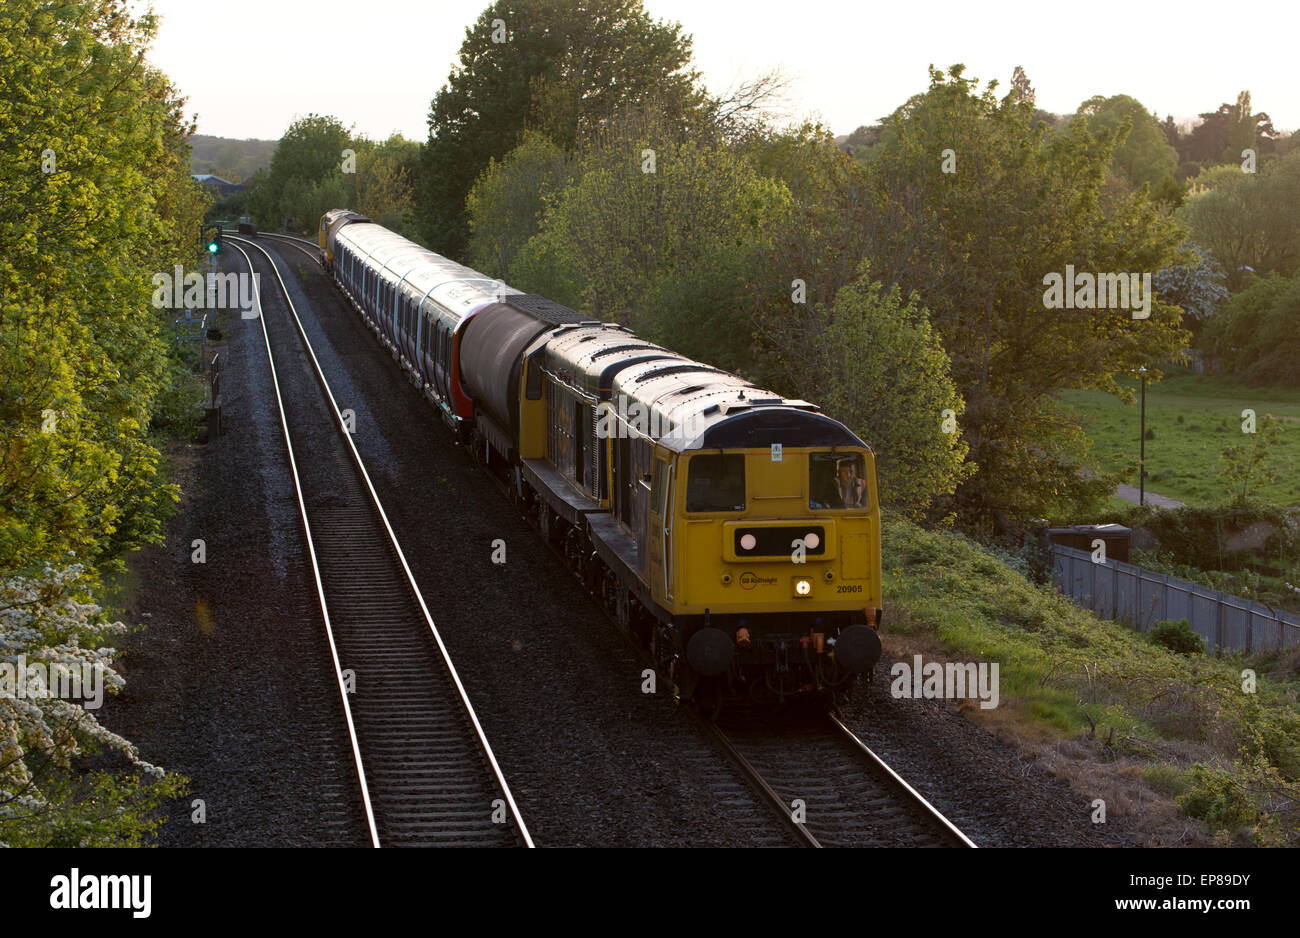 London Underground train being transported, Warwick, UK Stock Photo